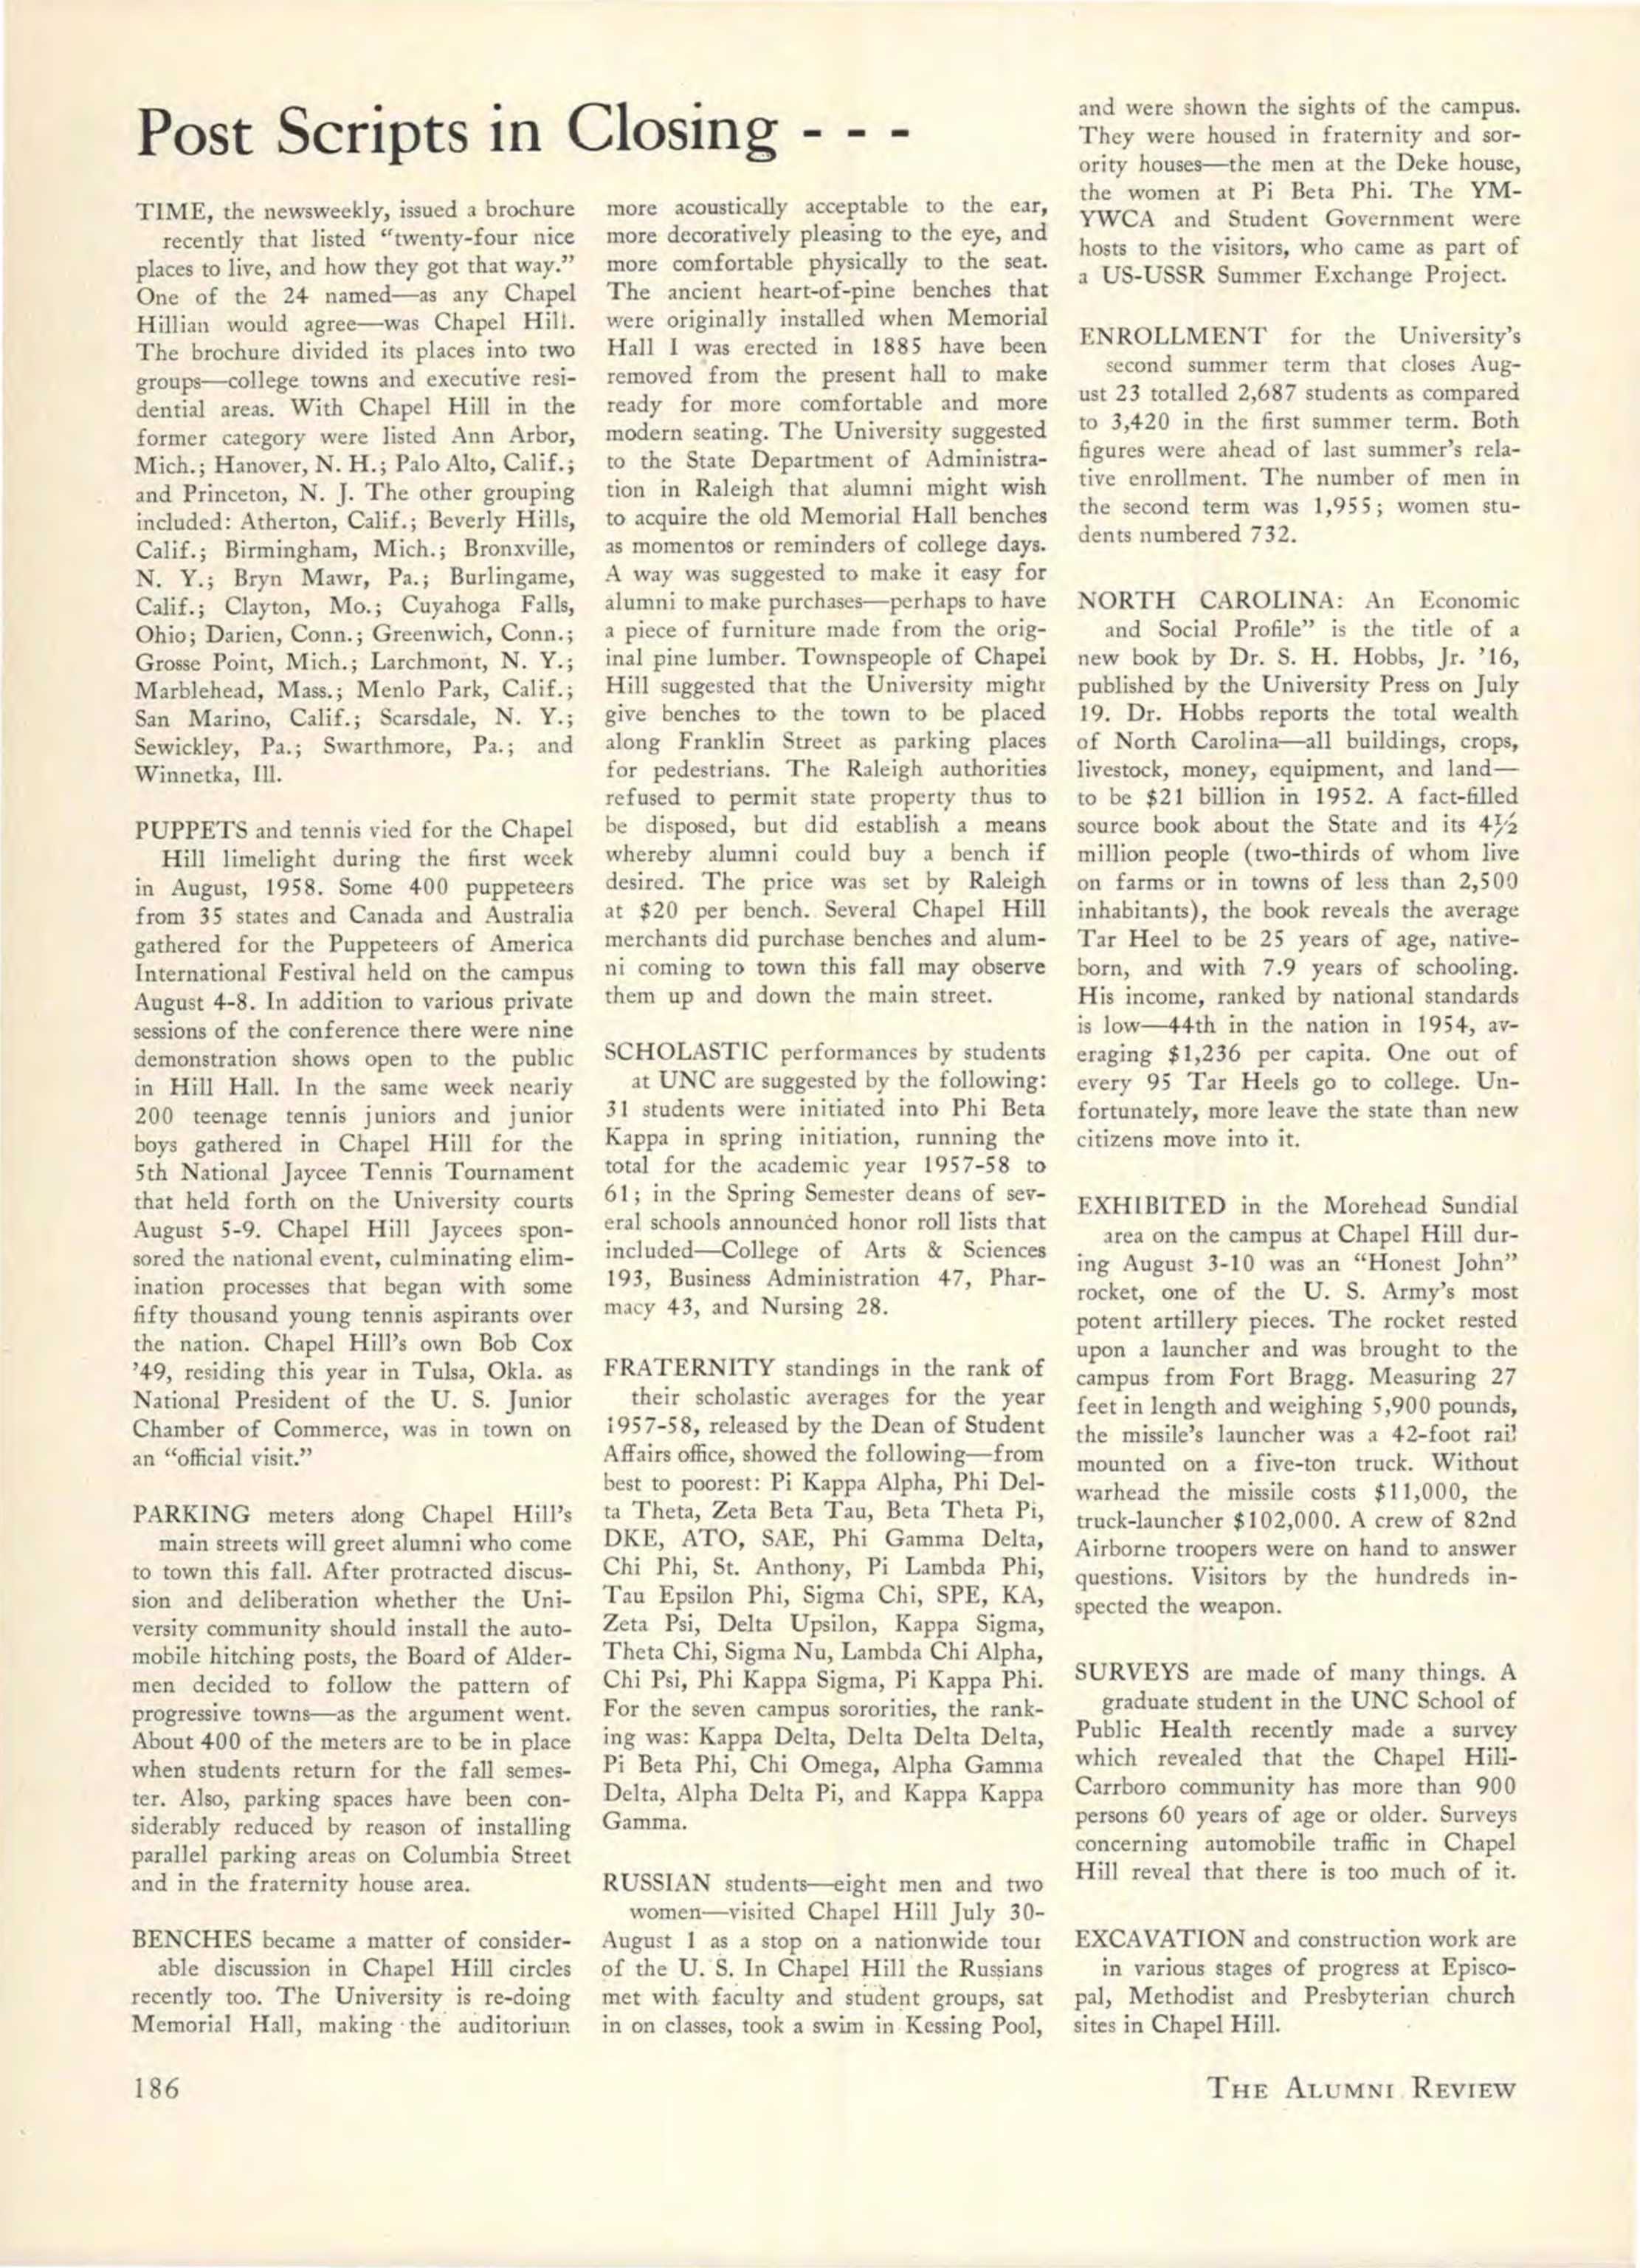 Carolina Alumni Review April 1958 Page 186